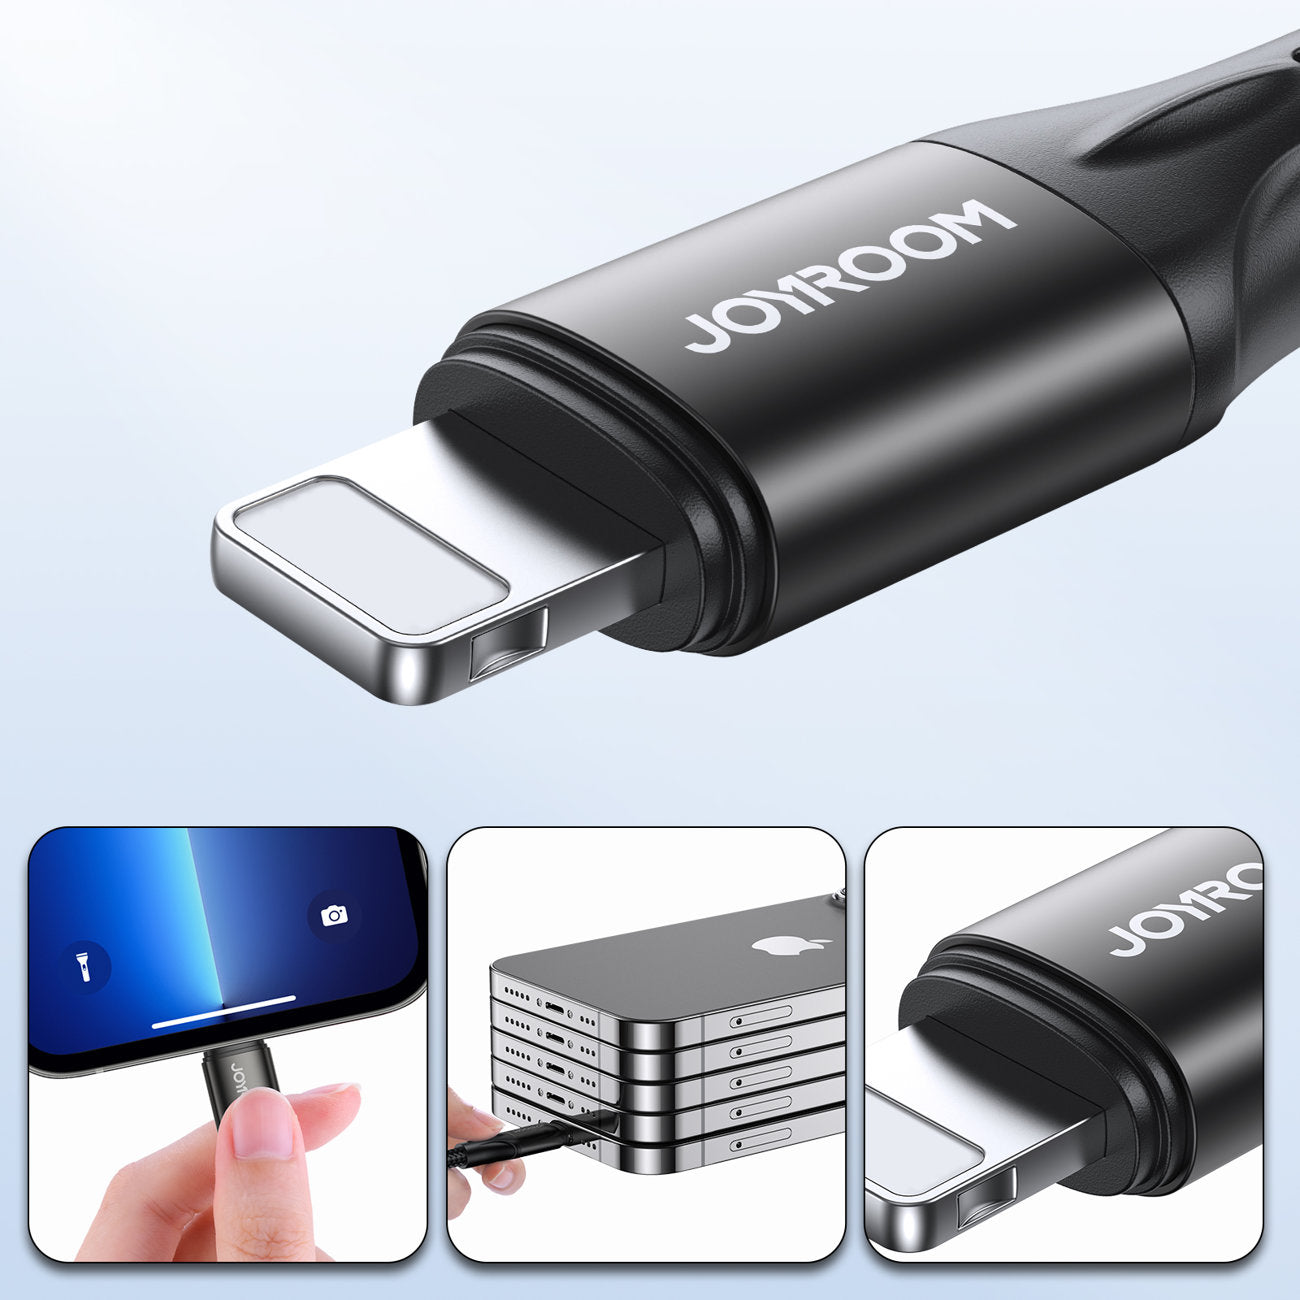 Joyroom fast charging / data cable USB Type C - Lightning PD 20W 1m black